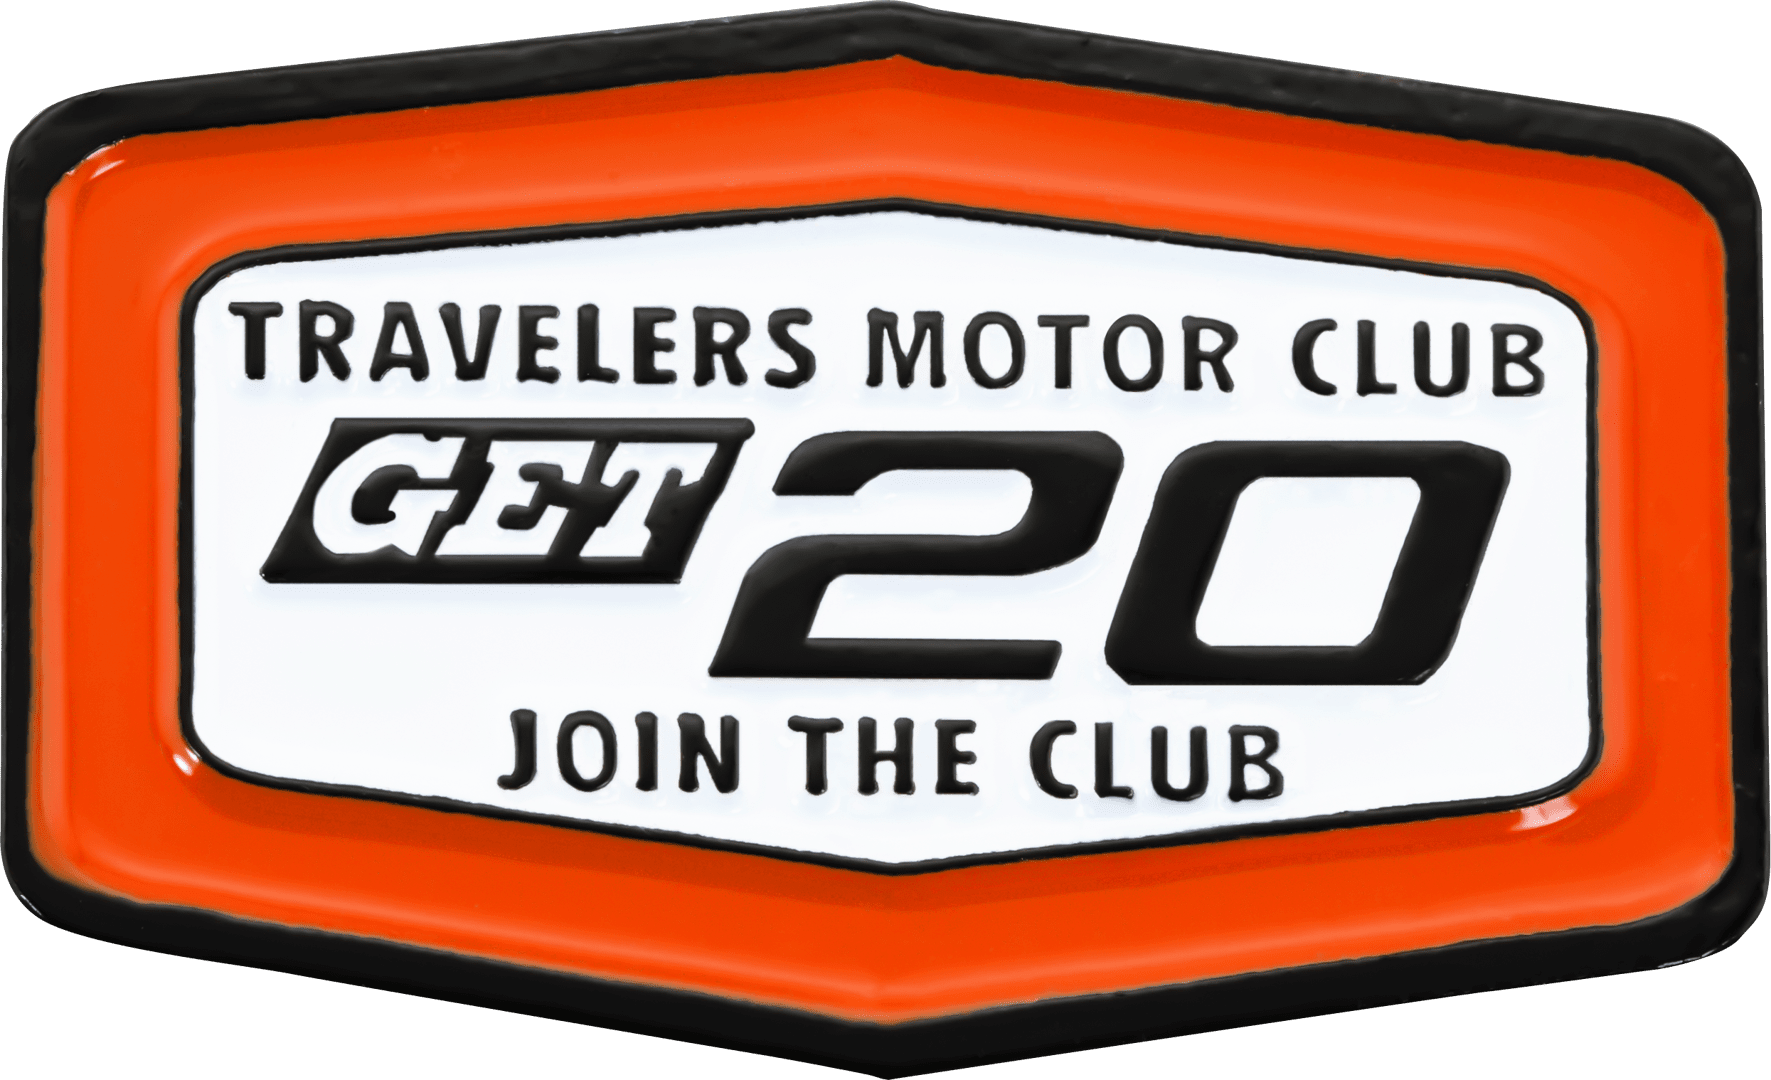 Travelers Motor Club